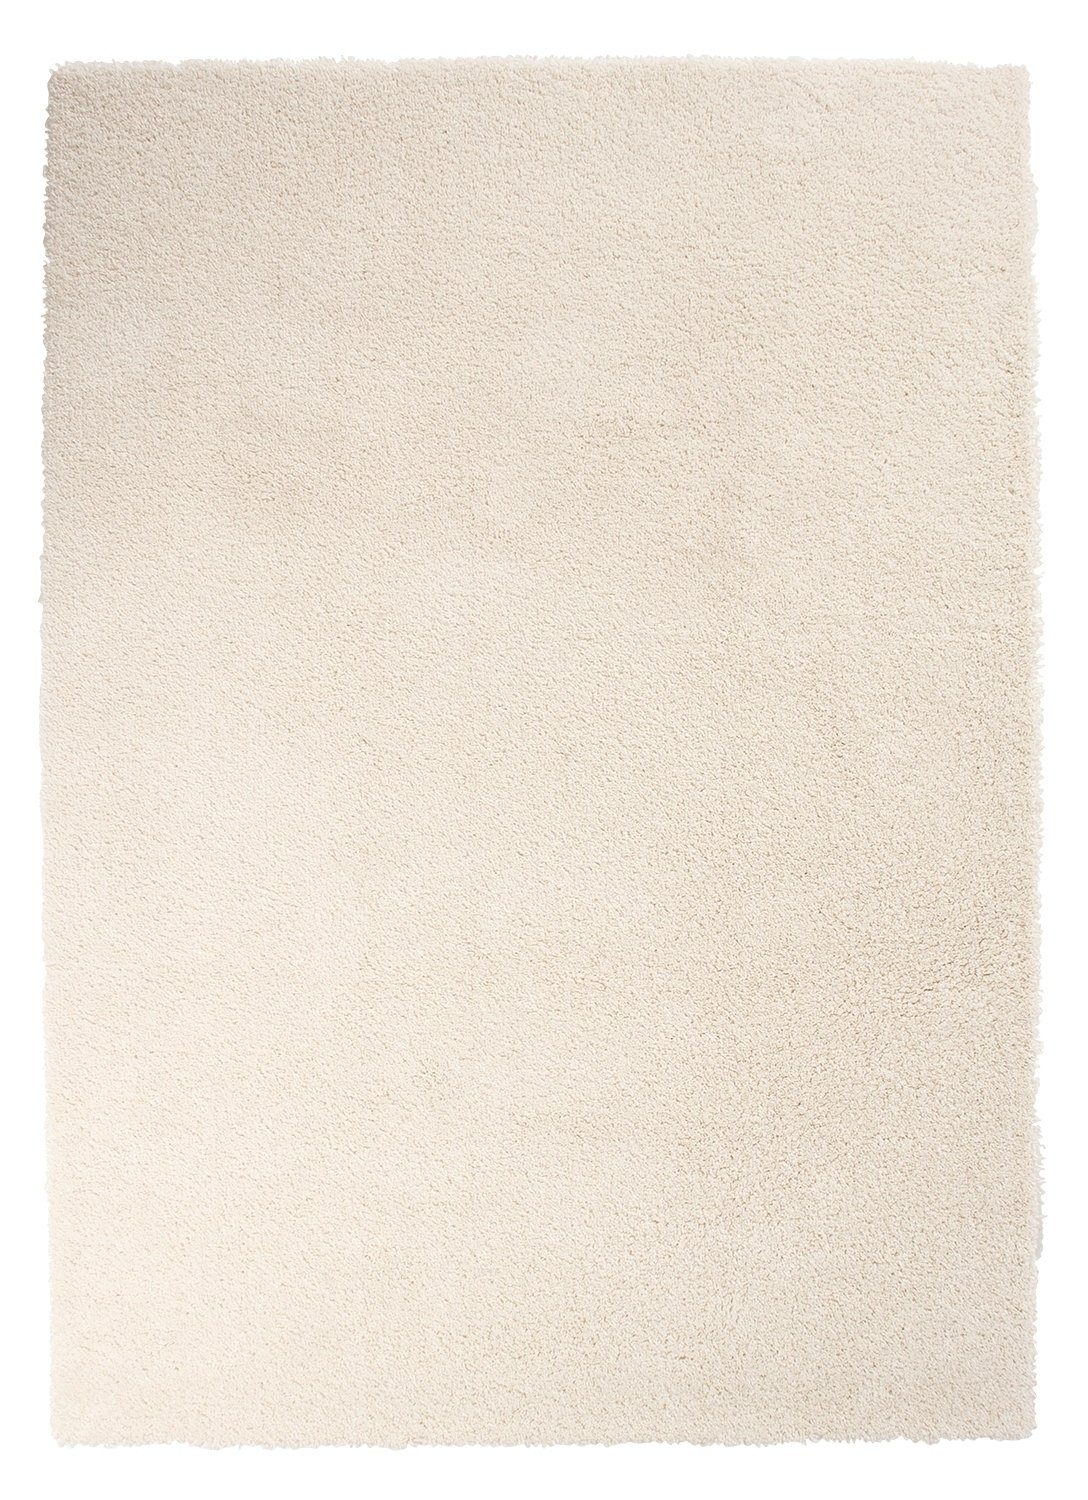 Teppich DELIGHT COSY, Polypropylen, Weiß, 120 x 170 cm, Balta Rugs, rechteckig, Höhe: 22 mm